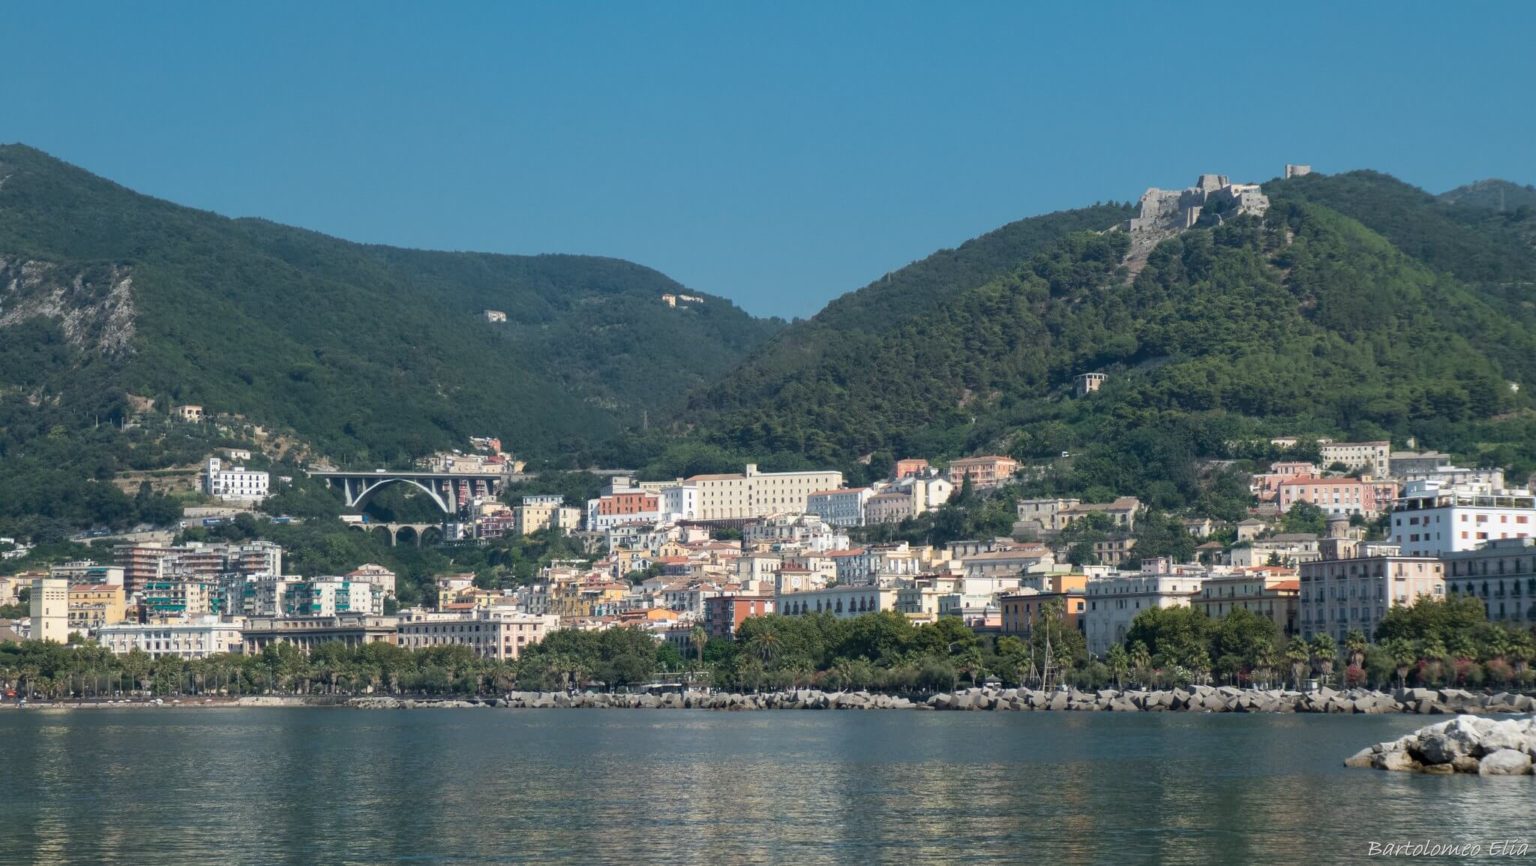 ferryscanner-destination-page-italy-salerno-5-1536x866